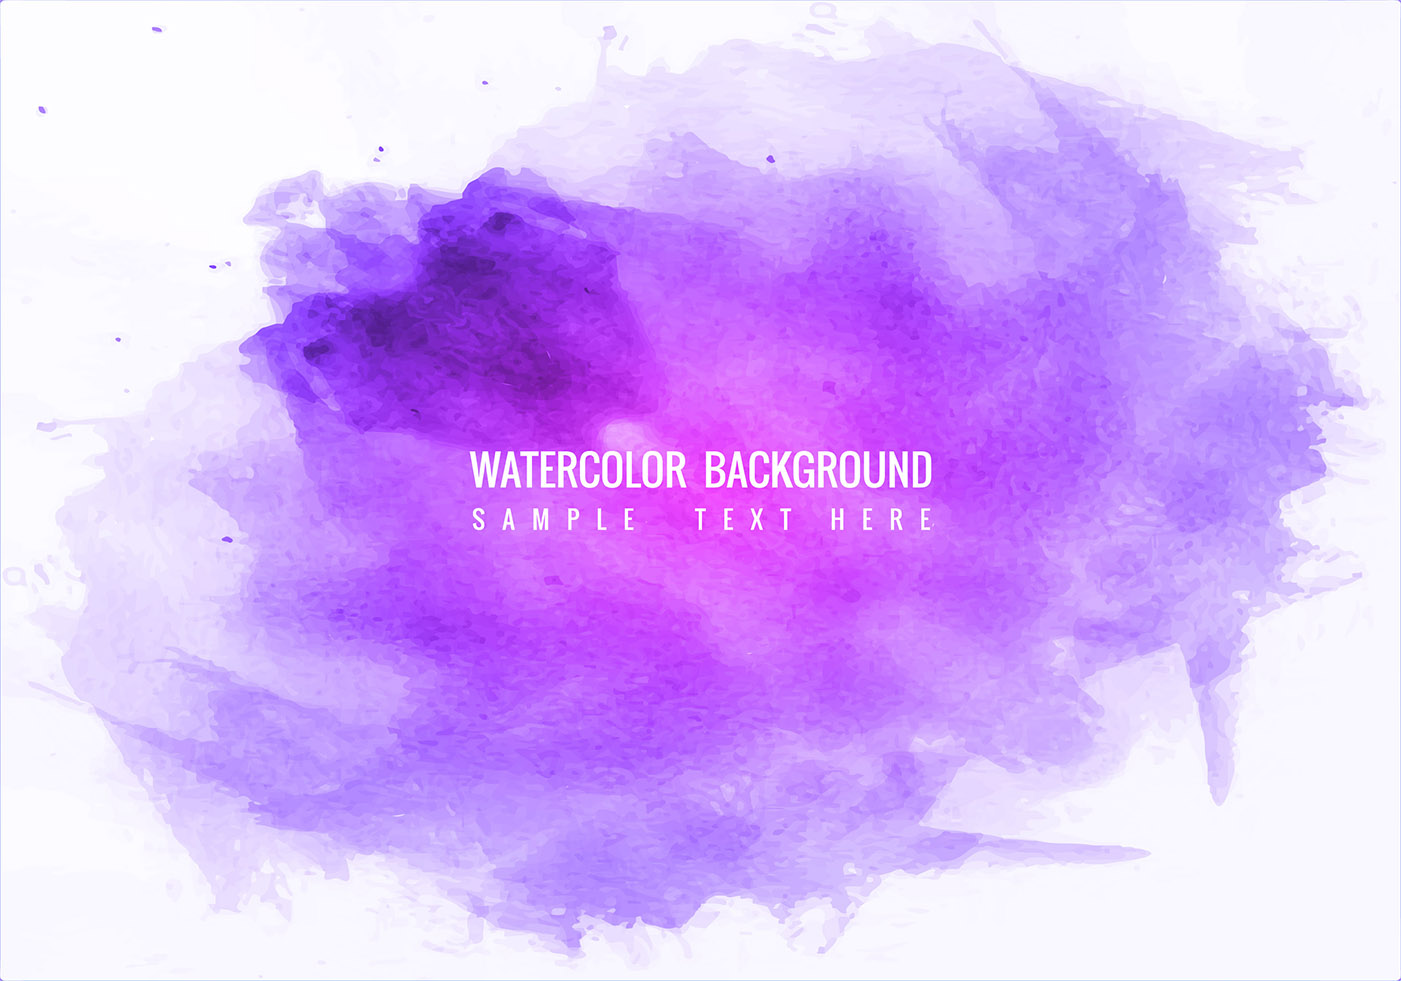 Download Vector Colorful Watercolor Splash background - Download Free Vectors, Clipart Graphics & Vector Art